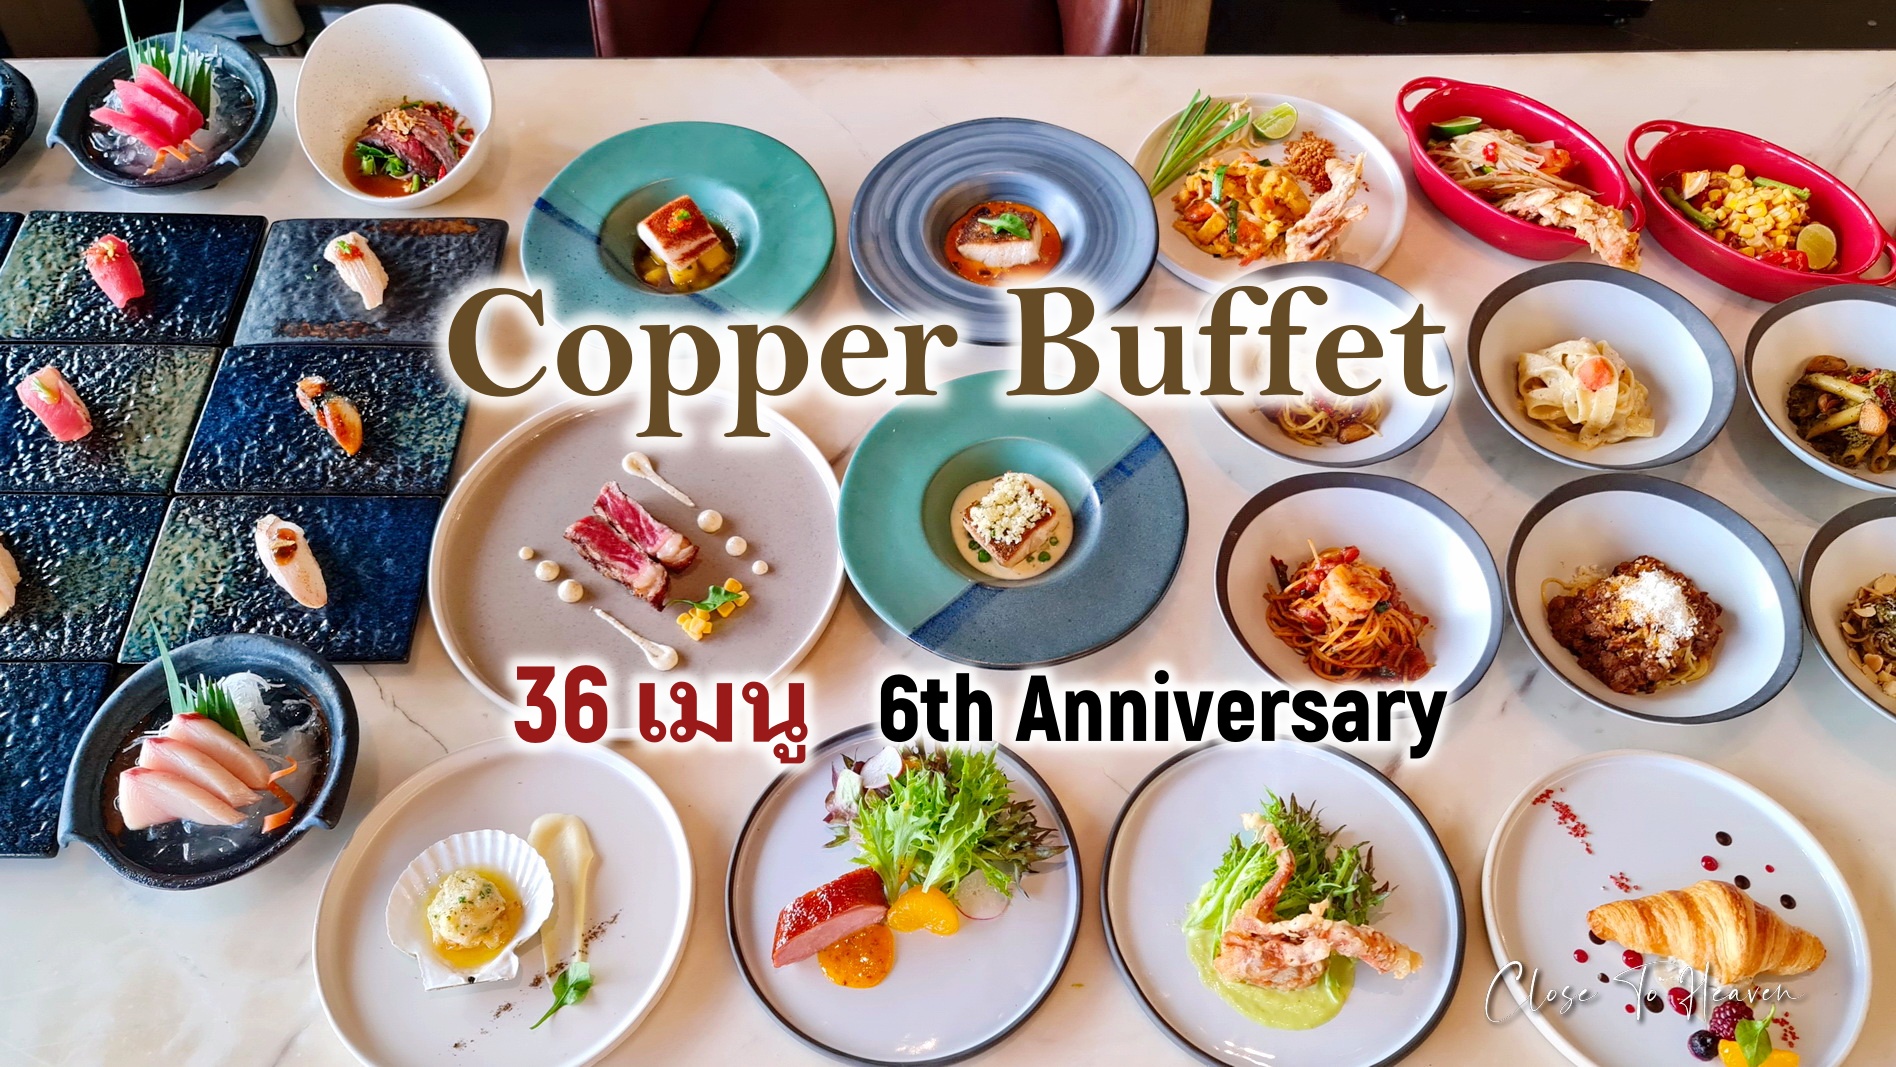 Copper Buffet 36 menus 6 Anniversary